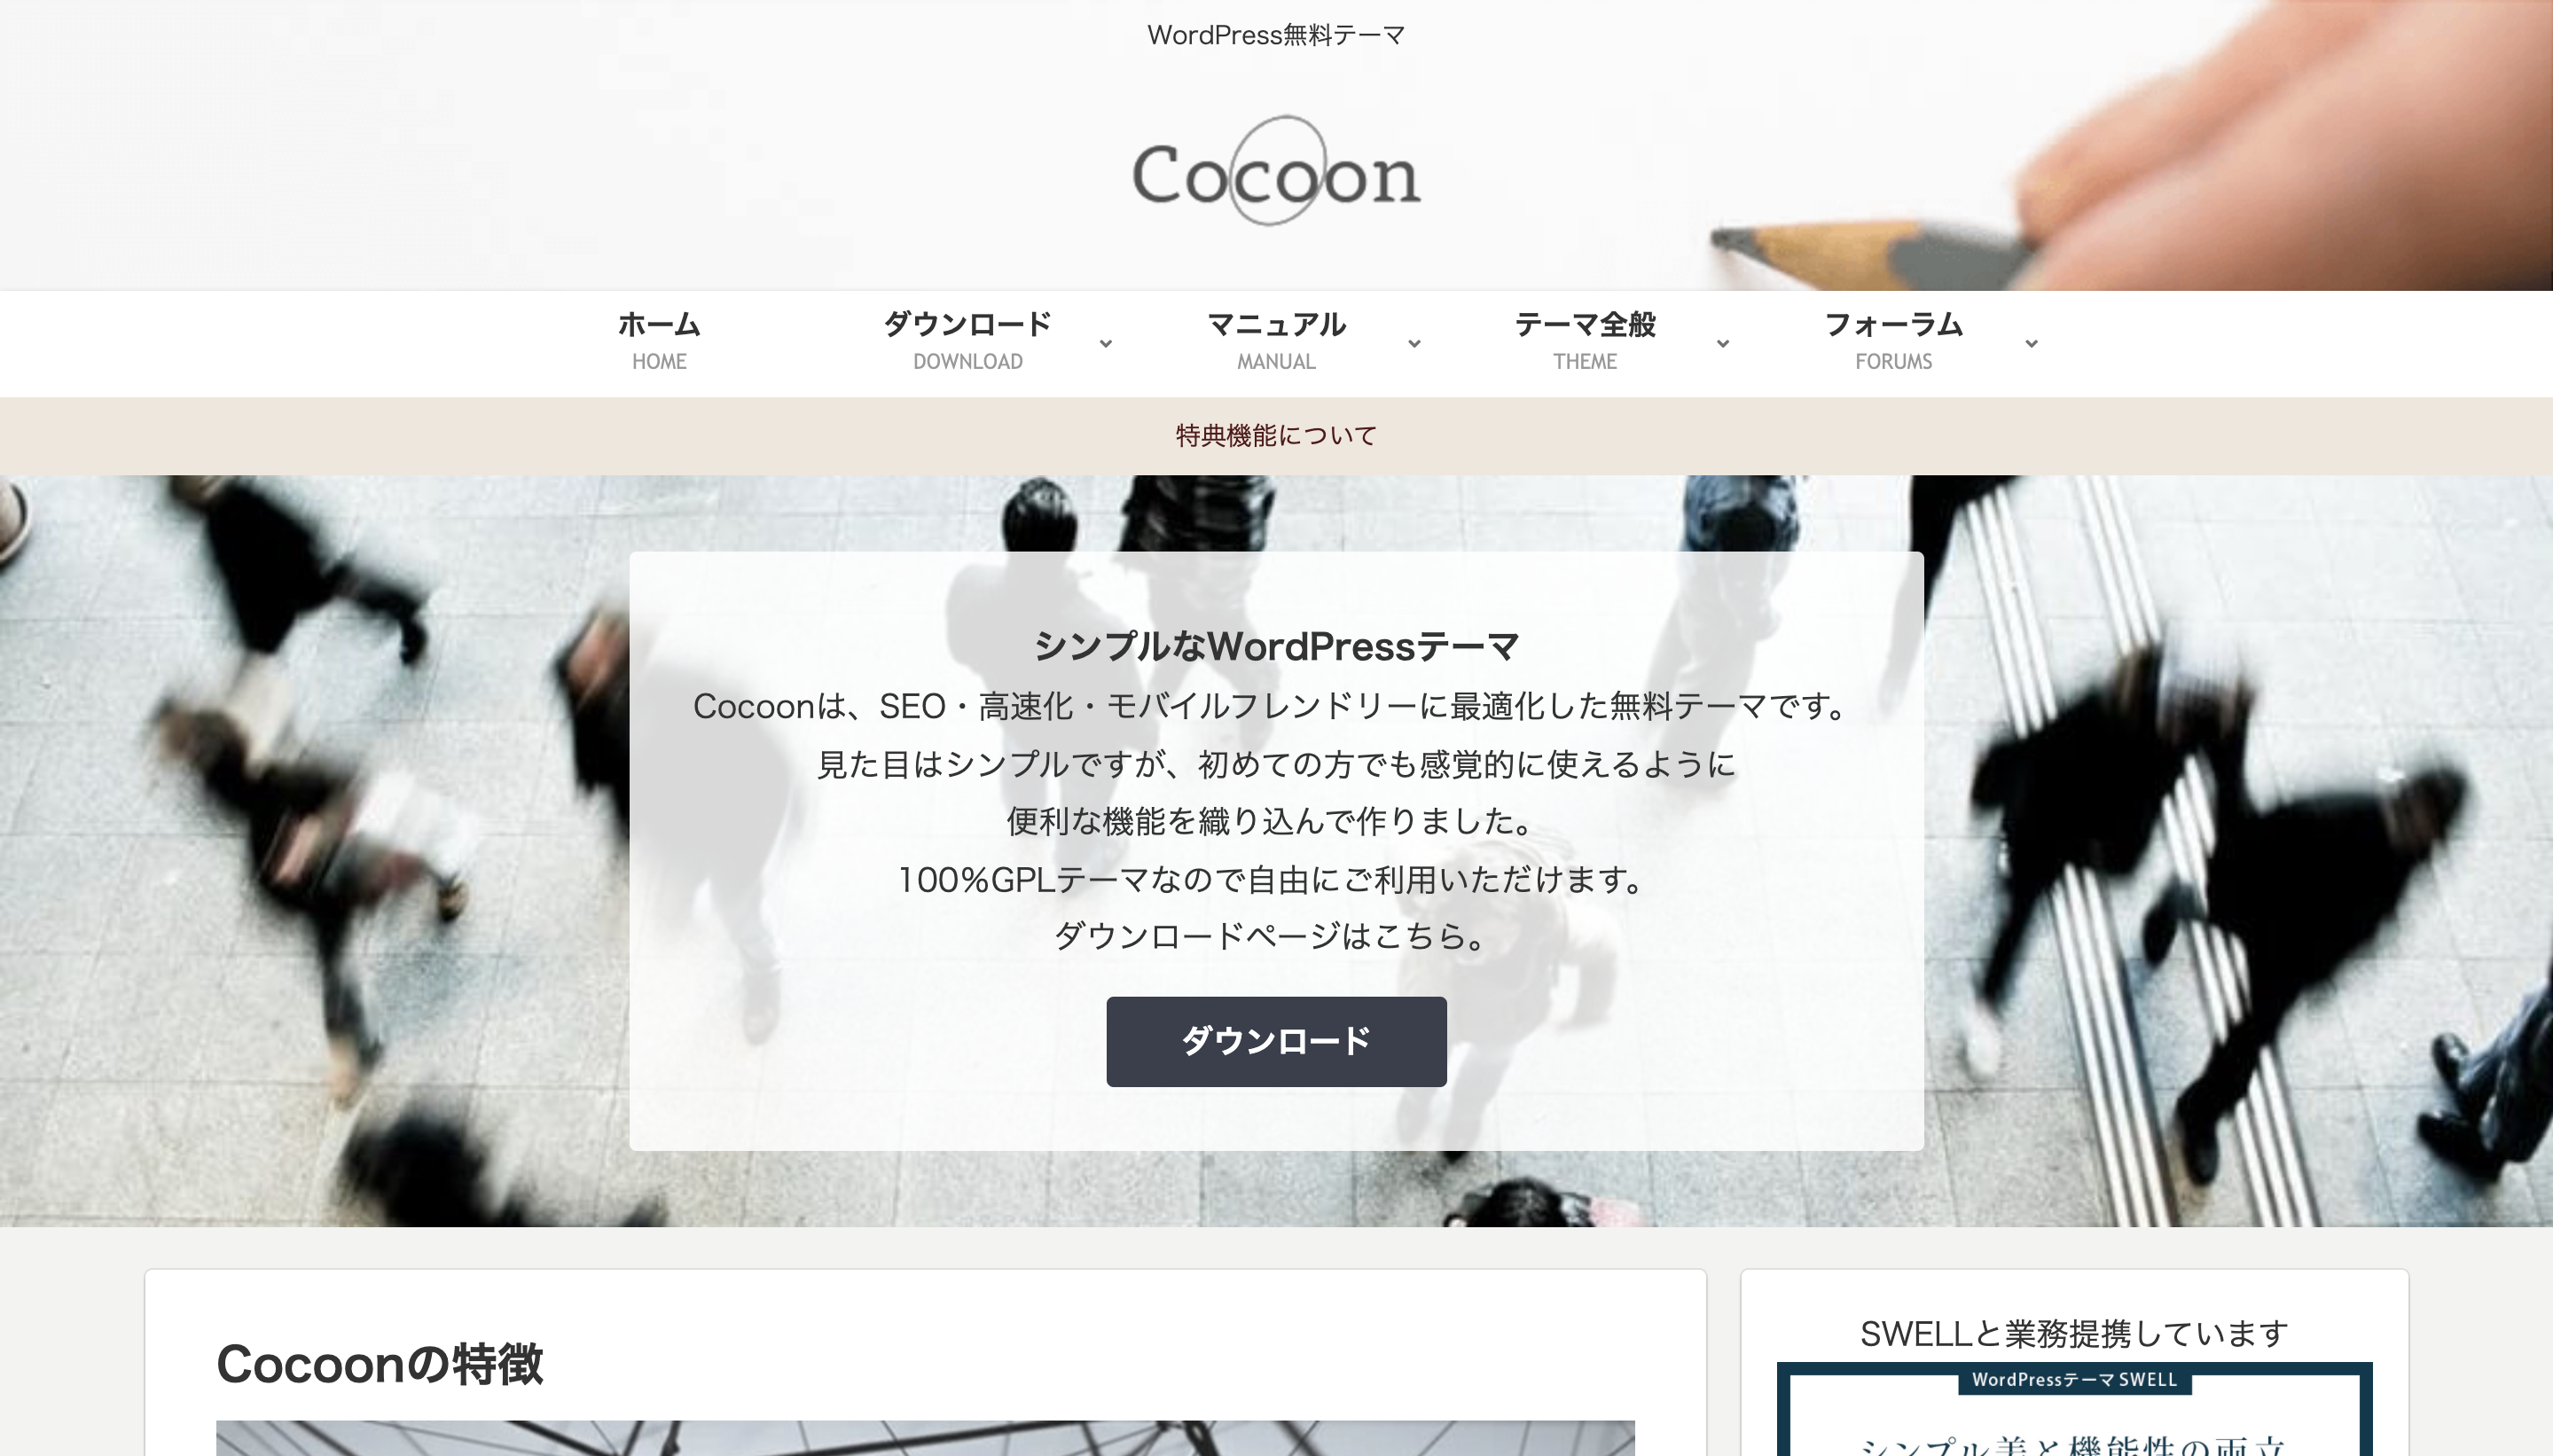 Cocoonのホームページを示す図